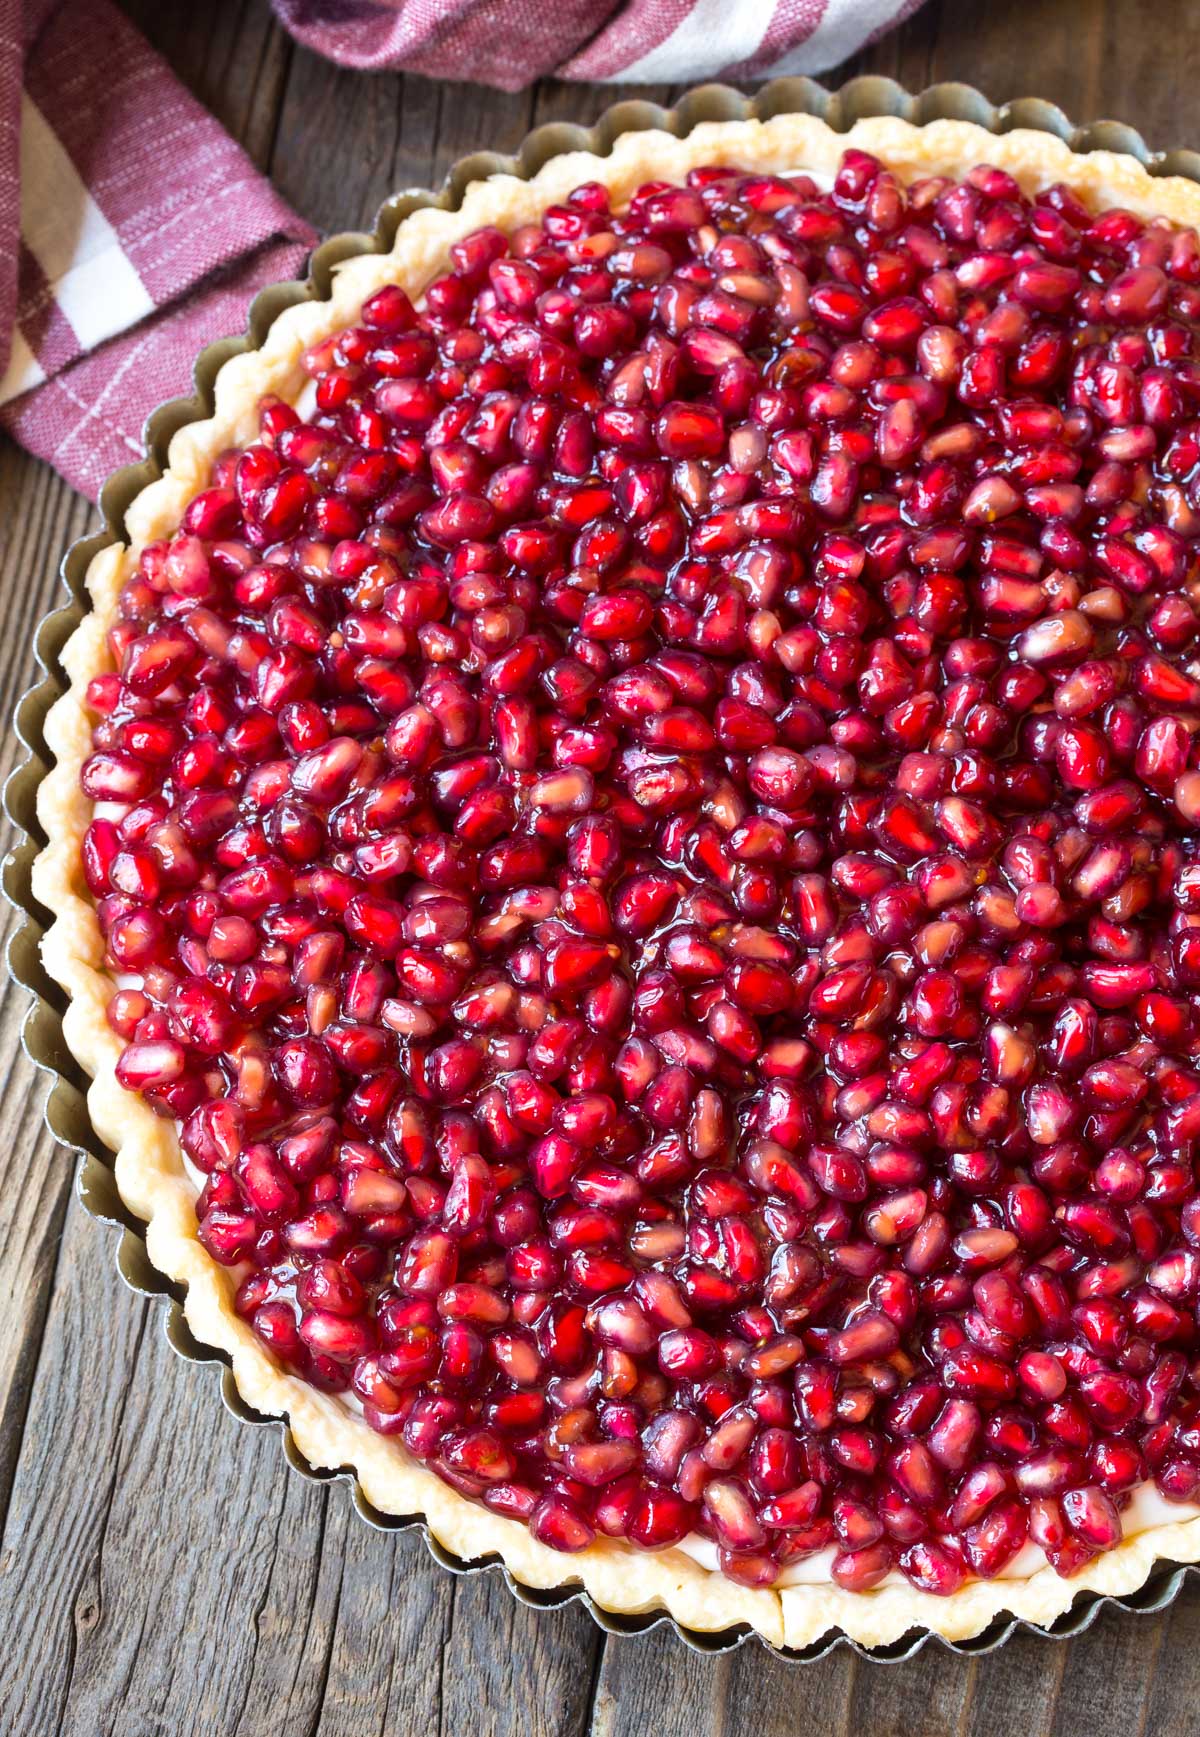 Perfect Pomegranate Cream Tart Recipe #ASpicyPerspective #holiday #pomegranaterecipe